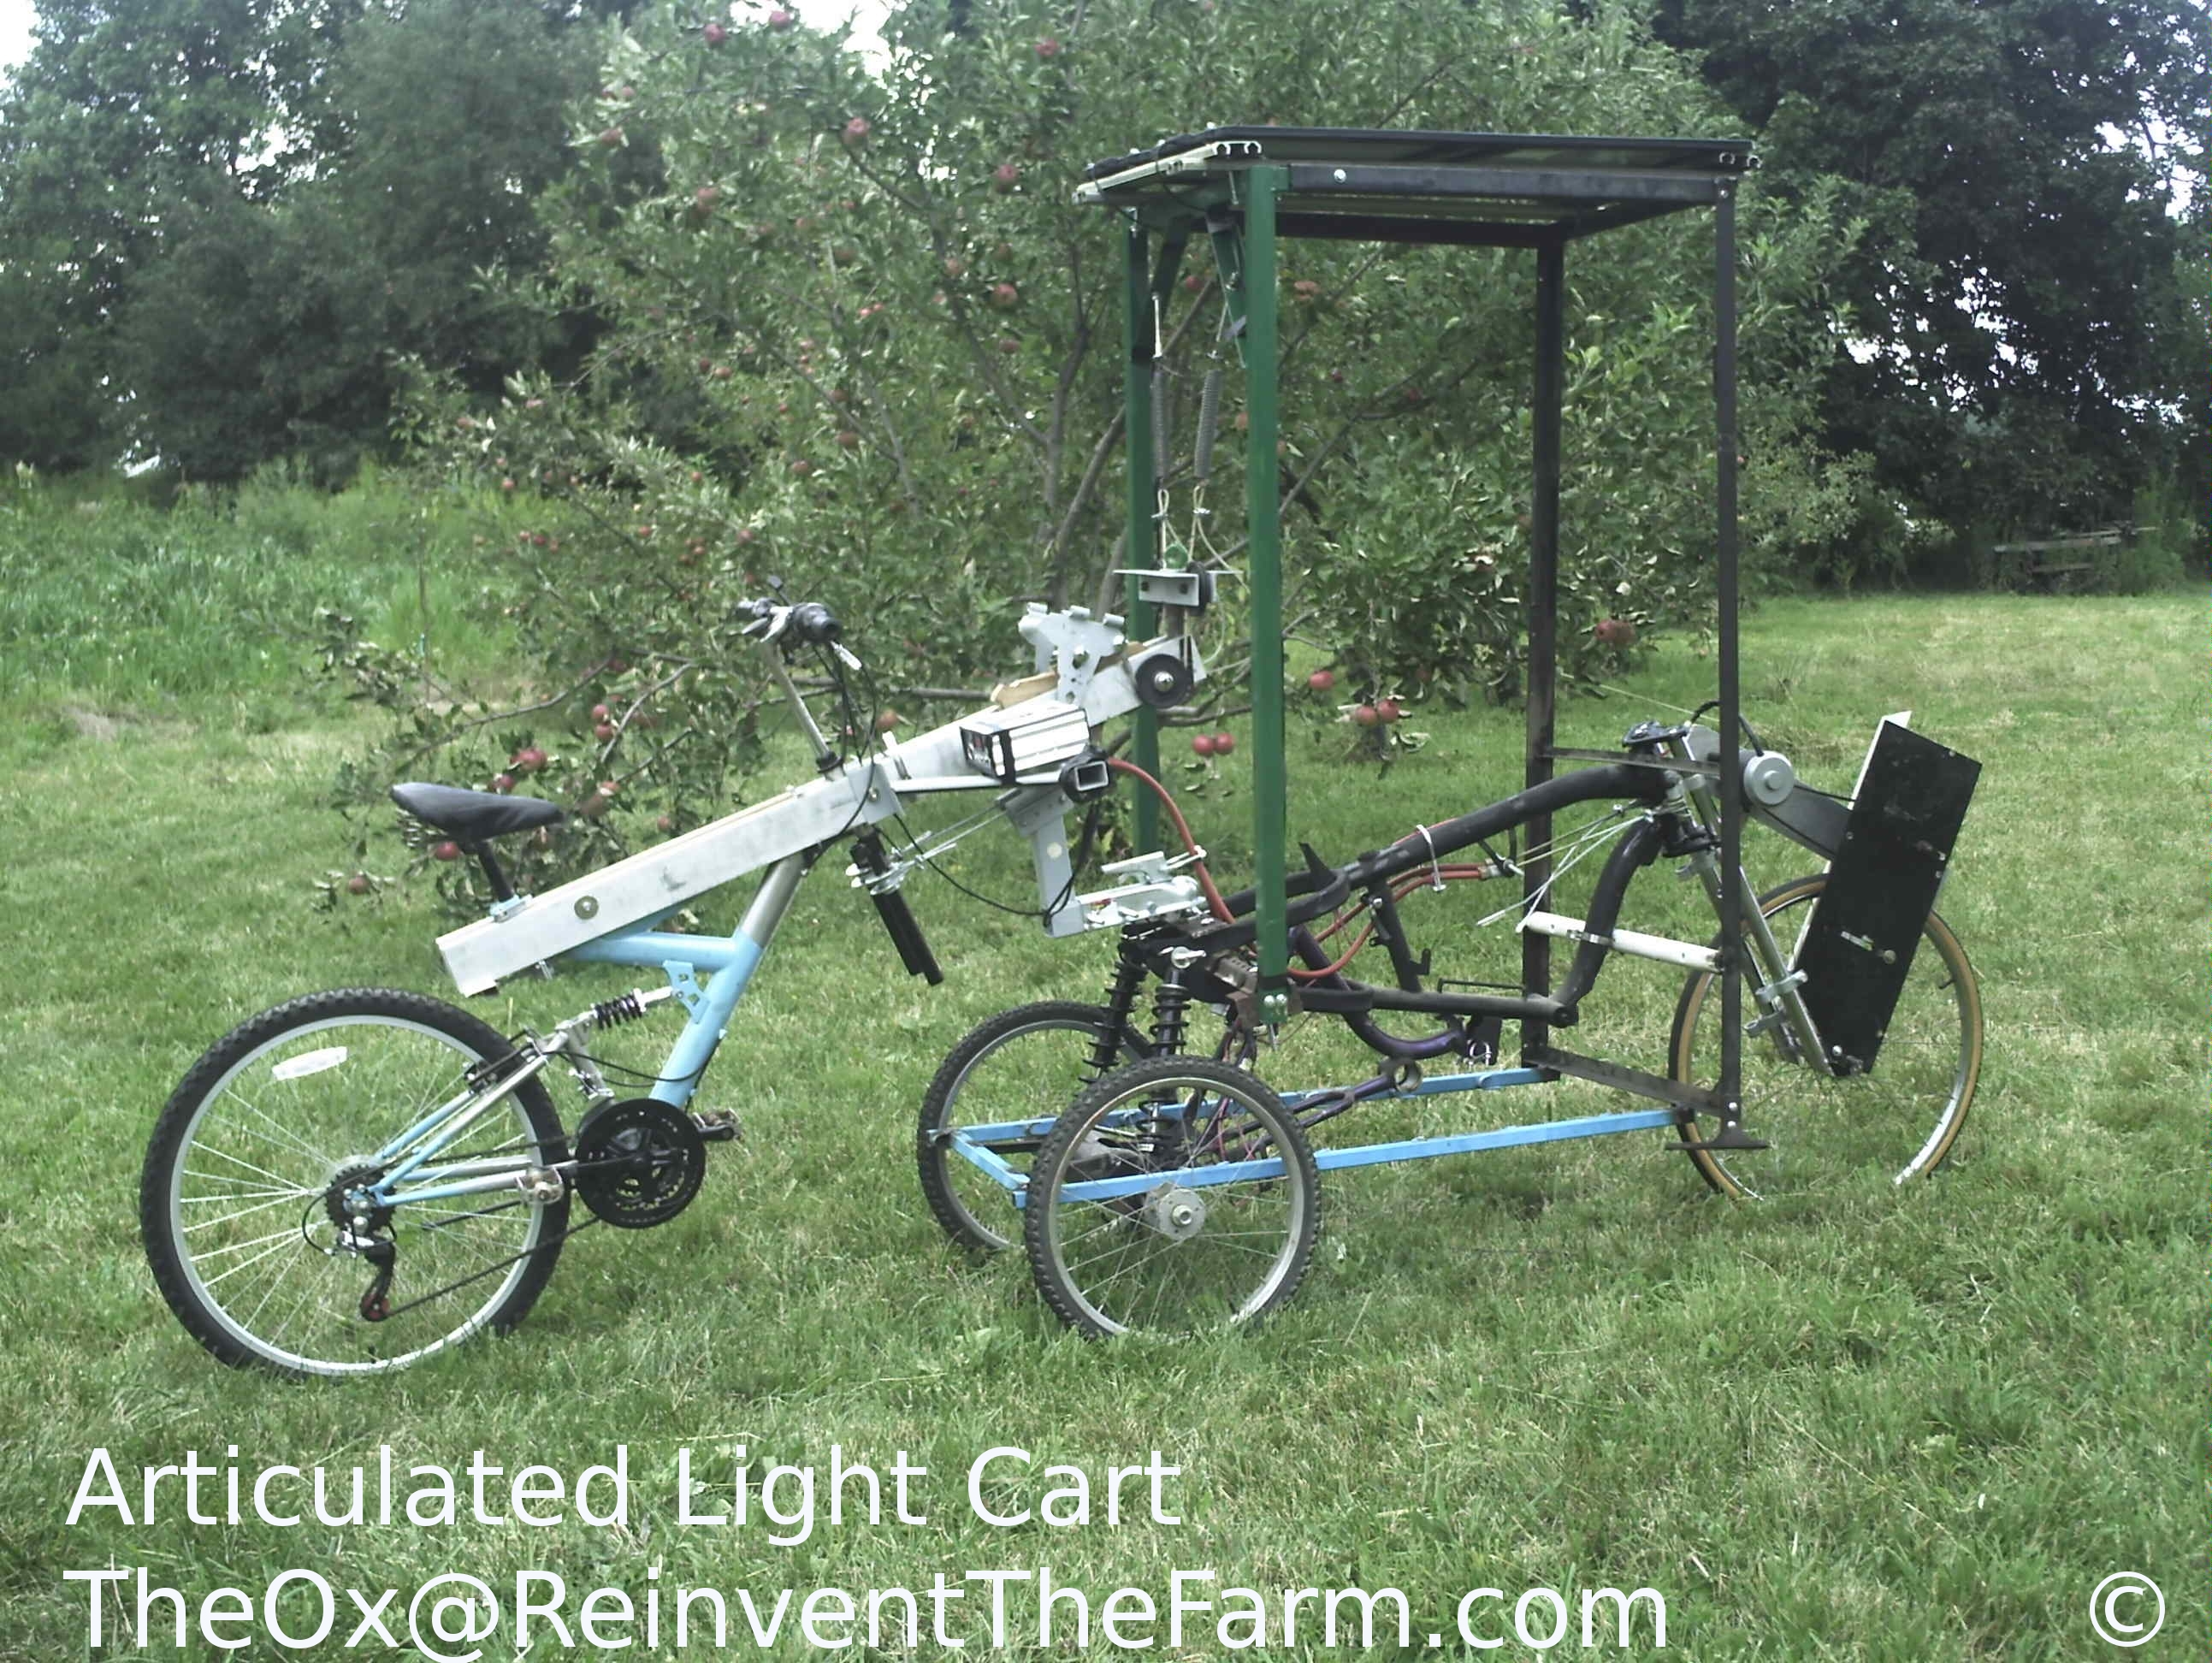 Prototype Articulated Light Cart Hybrid vehicle